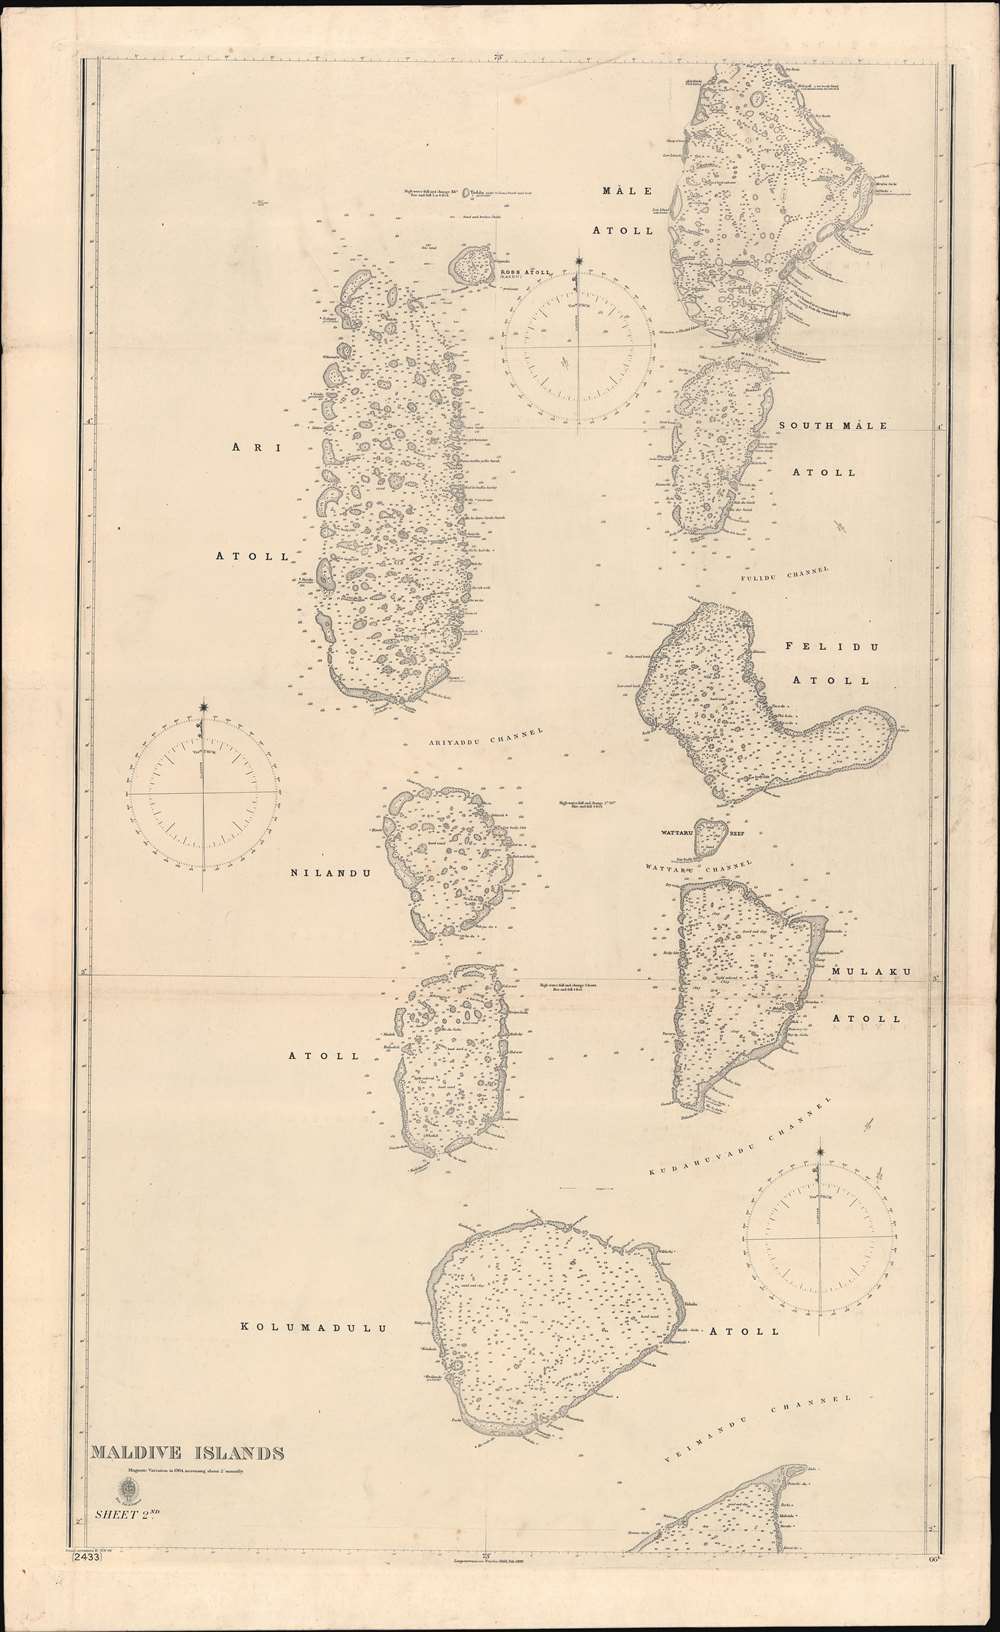 Trigonometrical Survey of the Maldive Islands. - Alternate View 3